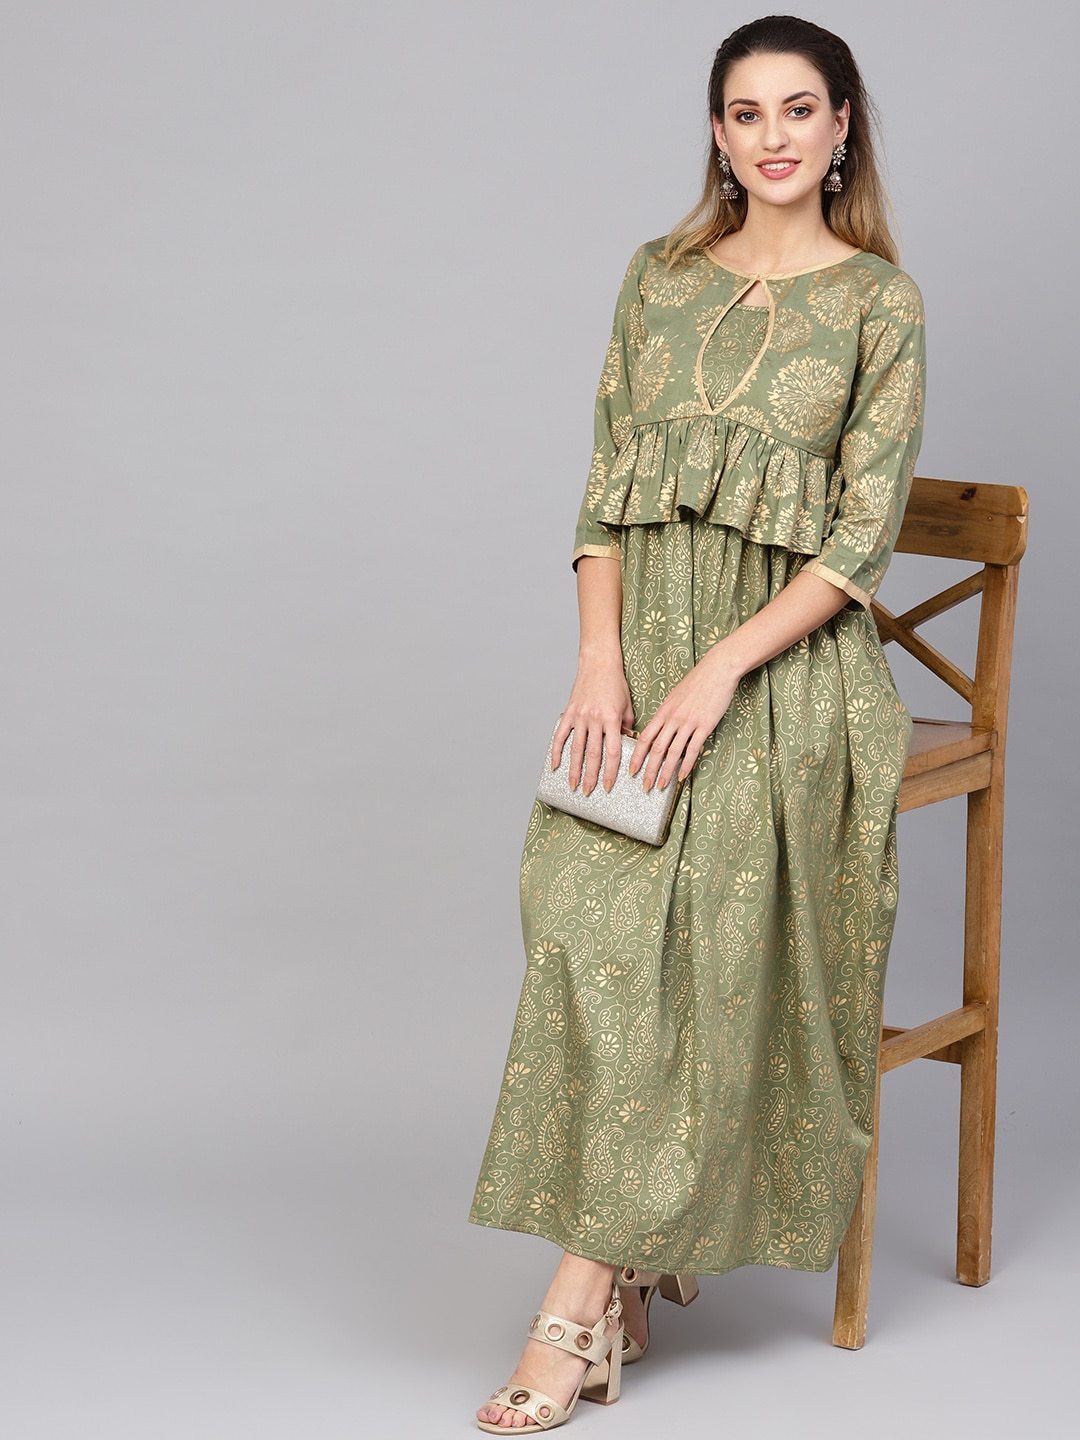 Women's  Olive Green & Golden Printed Layered Maxi Dress - AKS